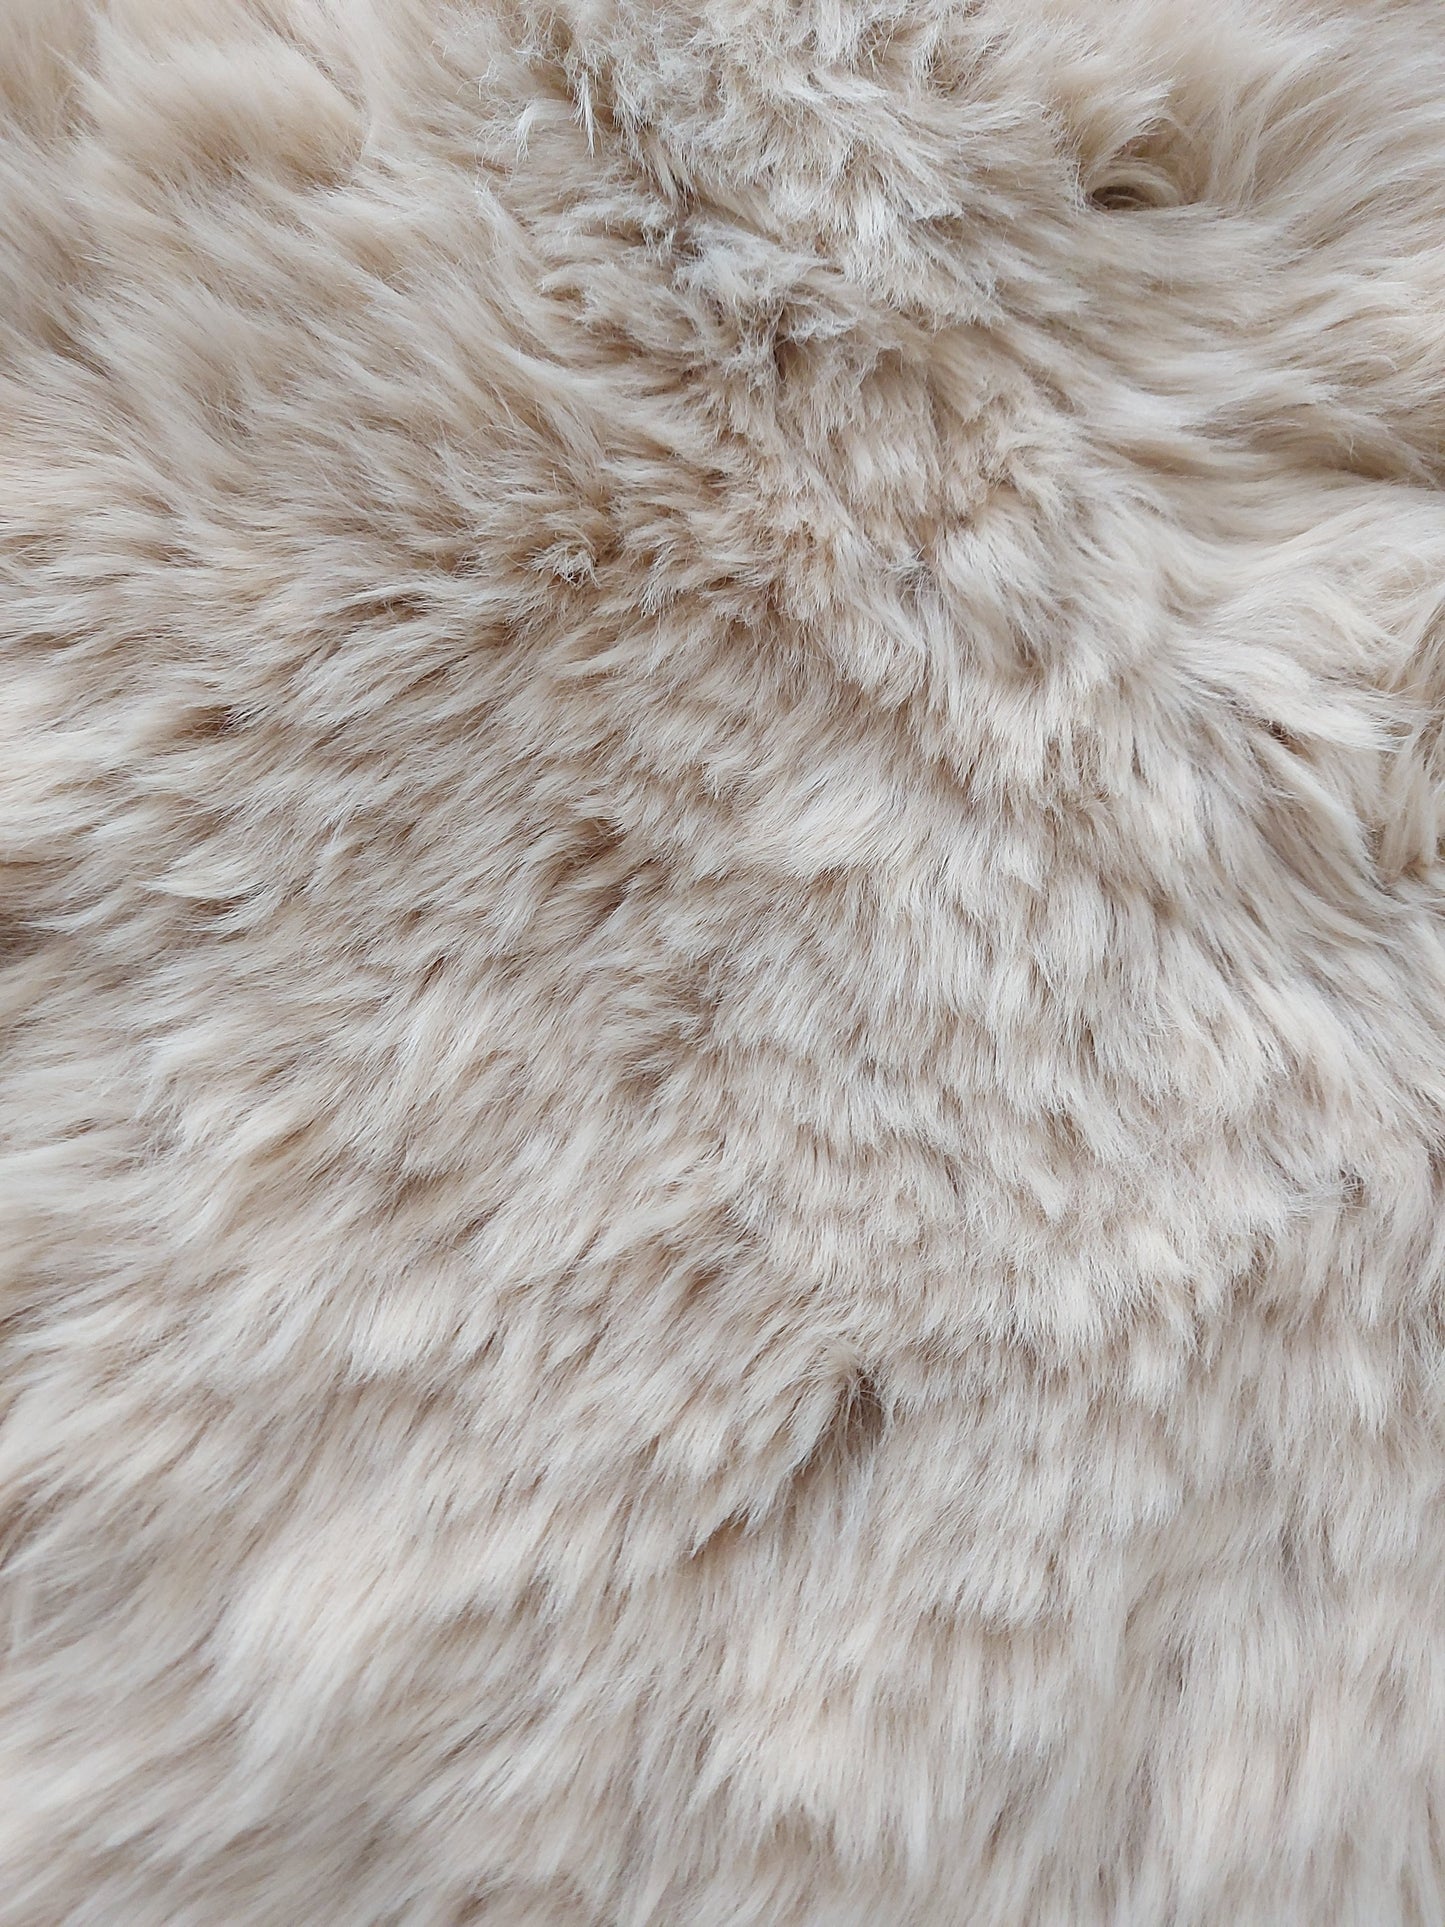 Genuine Sheepskin-Two Pelt Side by Side 3'x3'2 (90cm x 95cm)